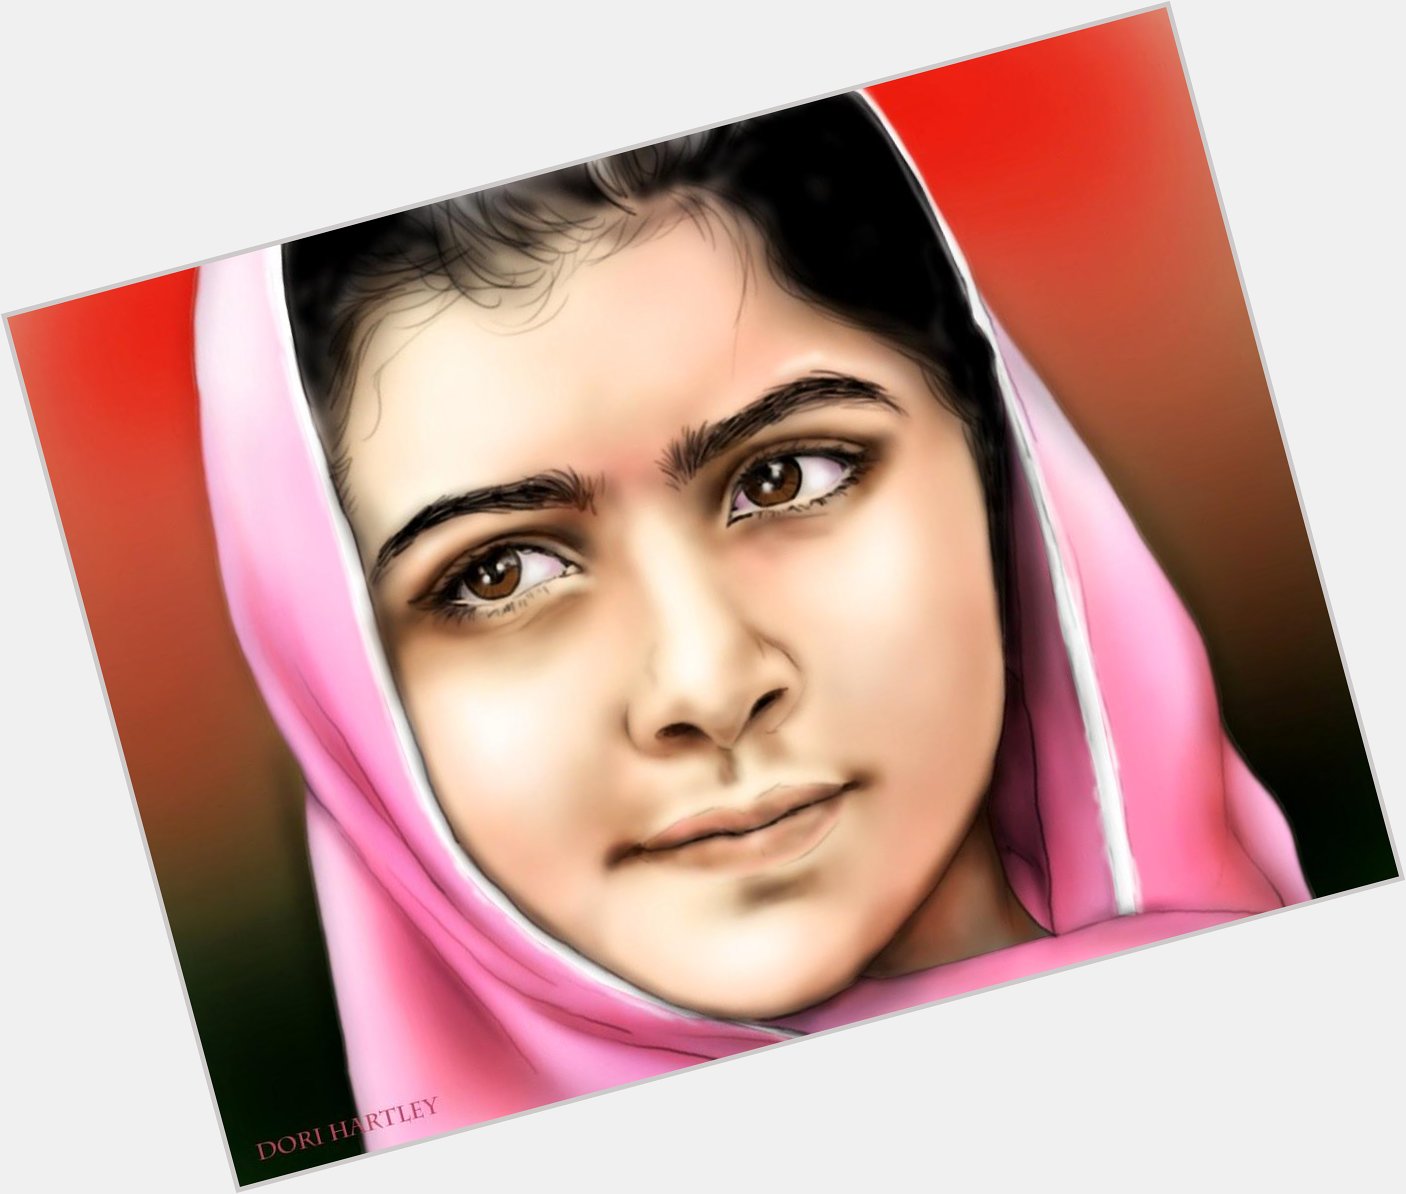 Happy Birthday Malala Yousafzai.
We are proud of you. 